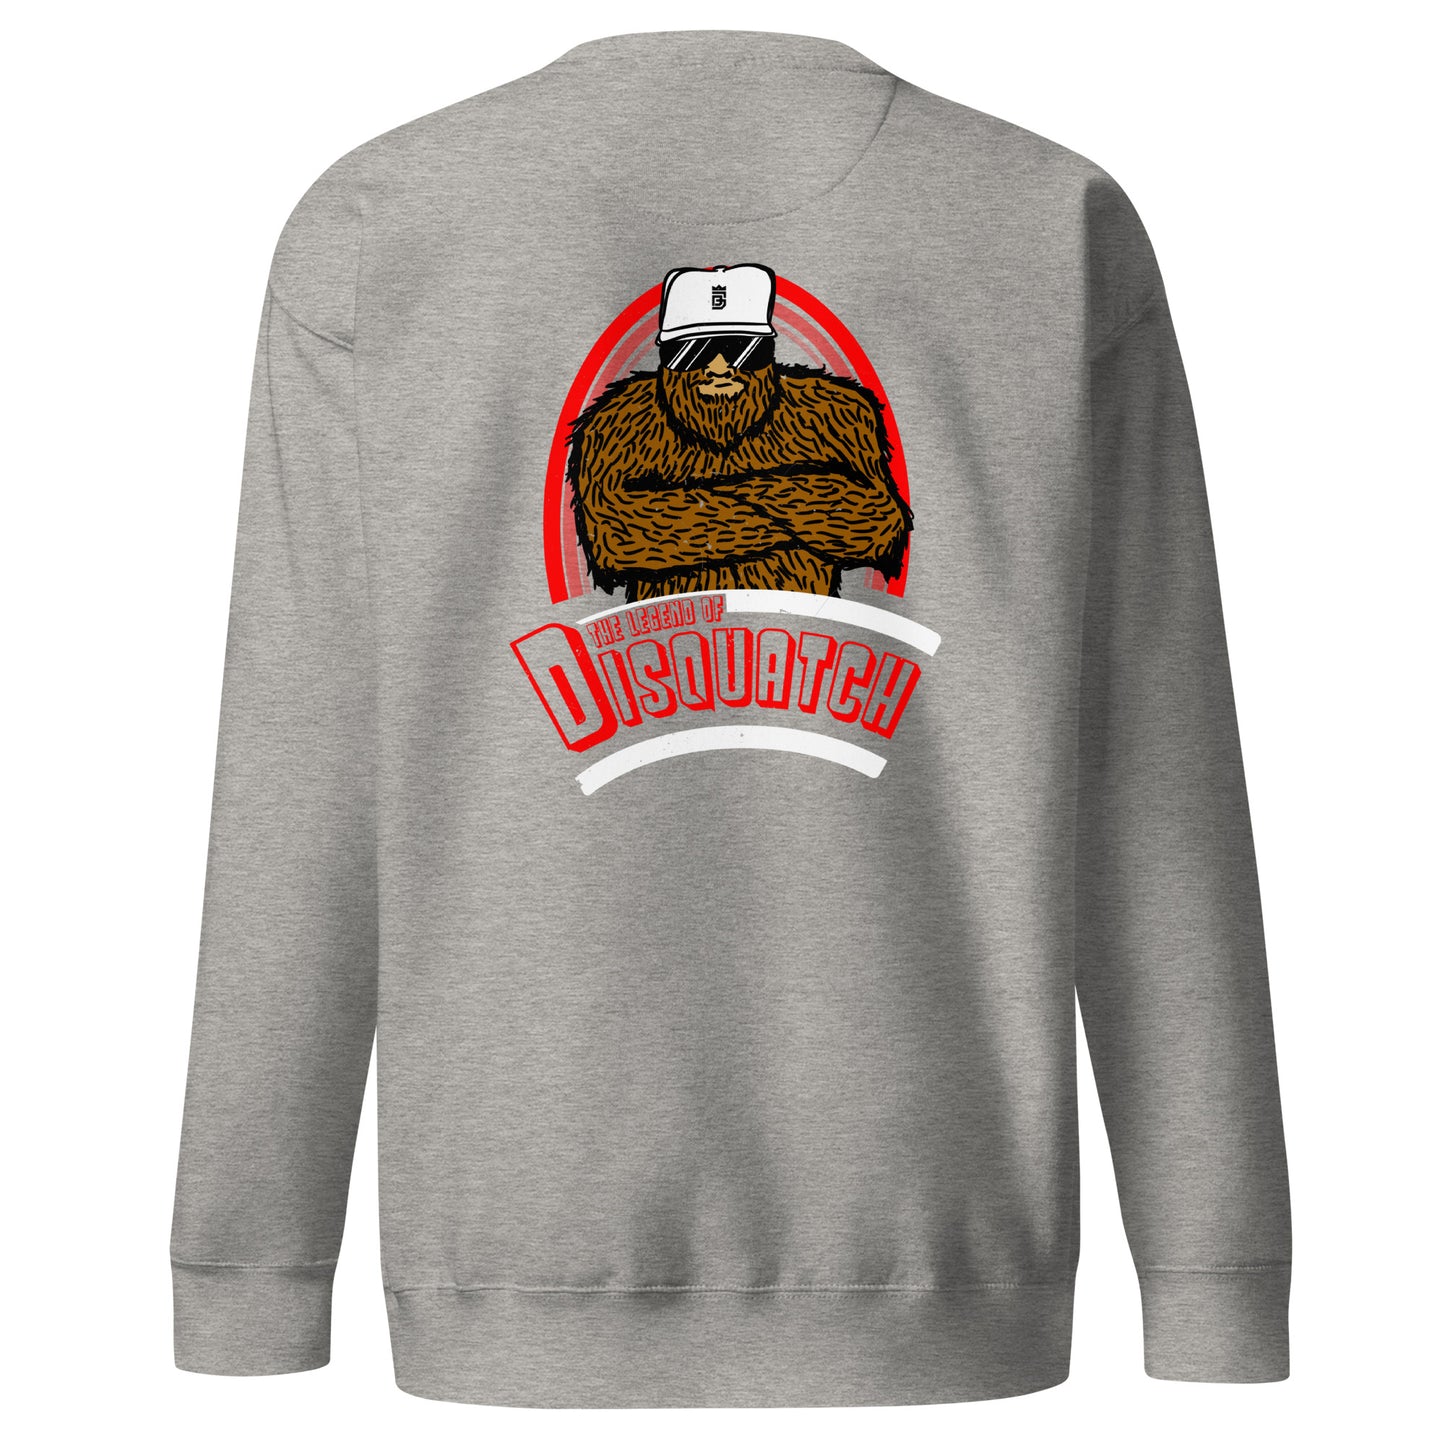 Disquatch Crew Sweatshirt